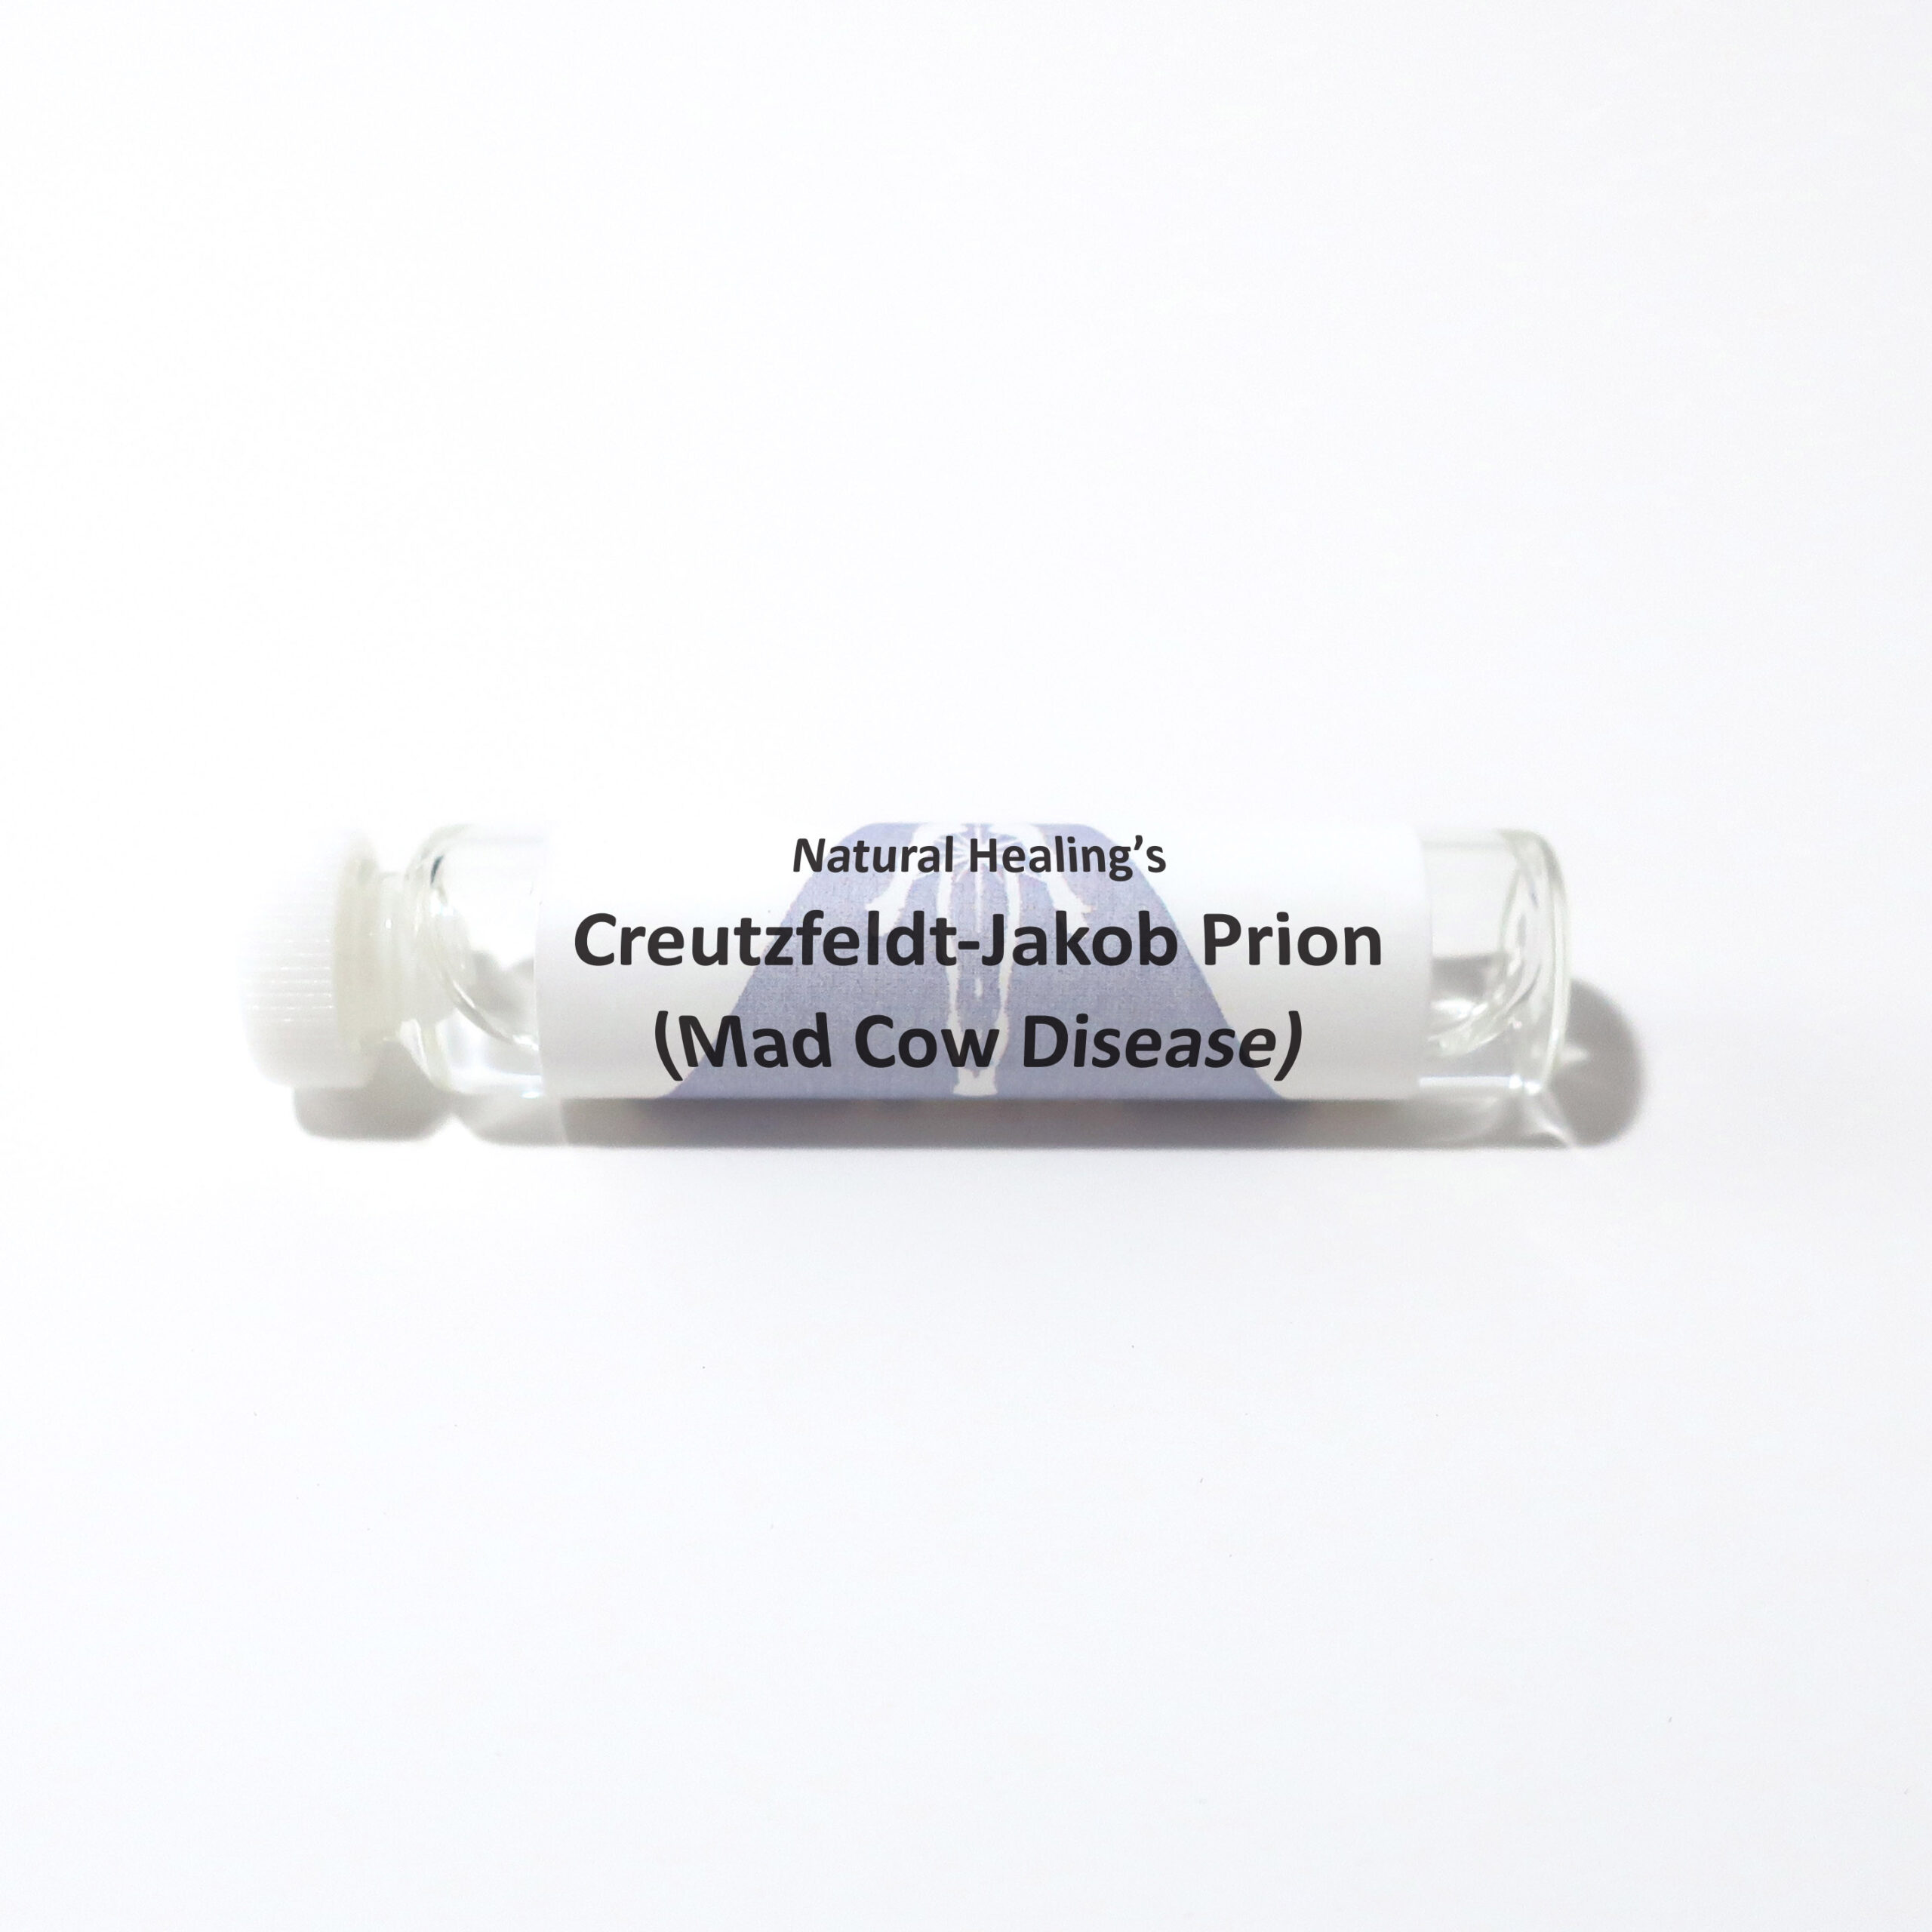 Creutzfeldt-Jakob Prion (Mad Cow Disease)